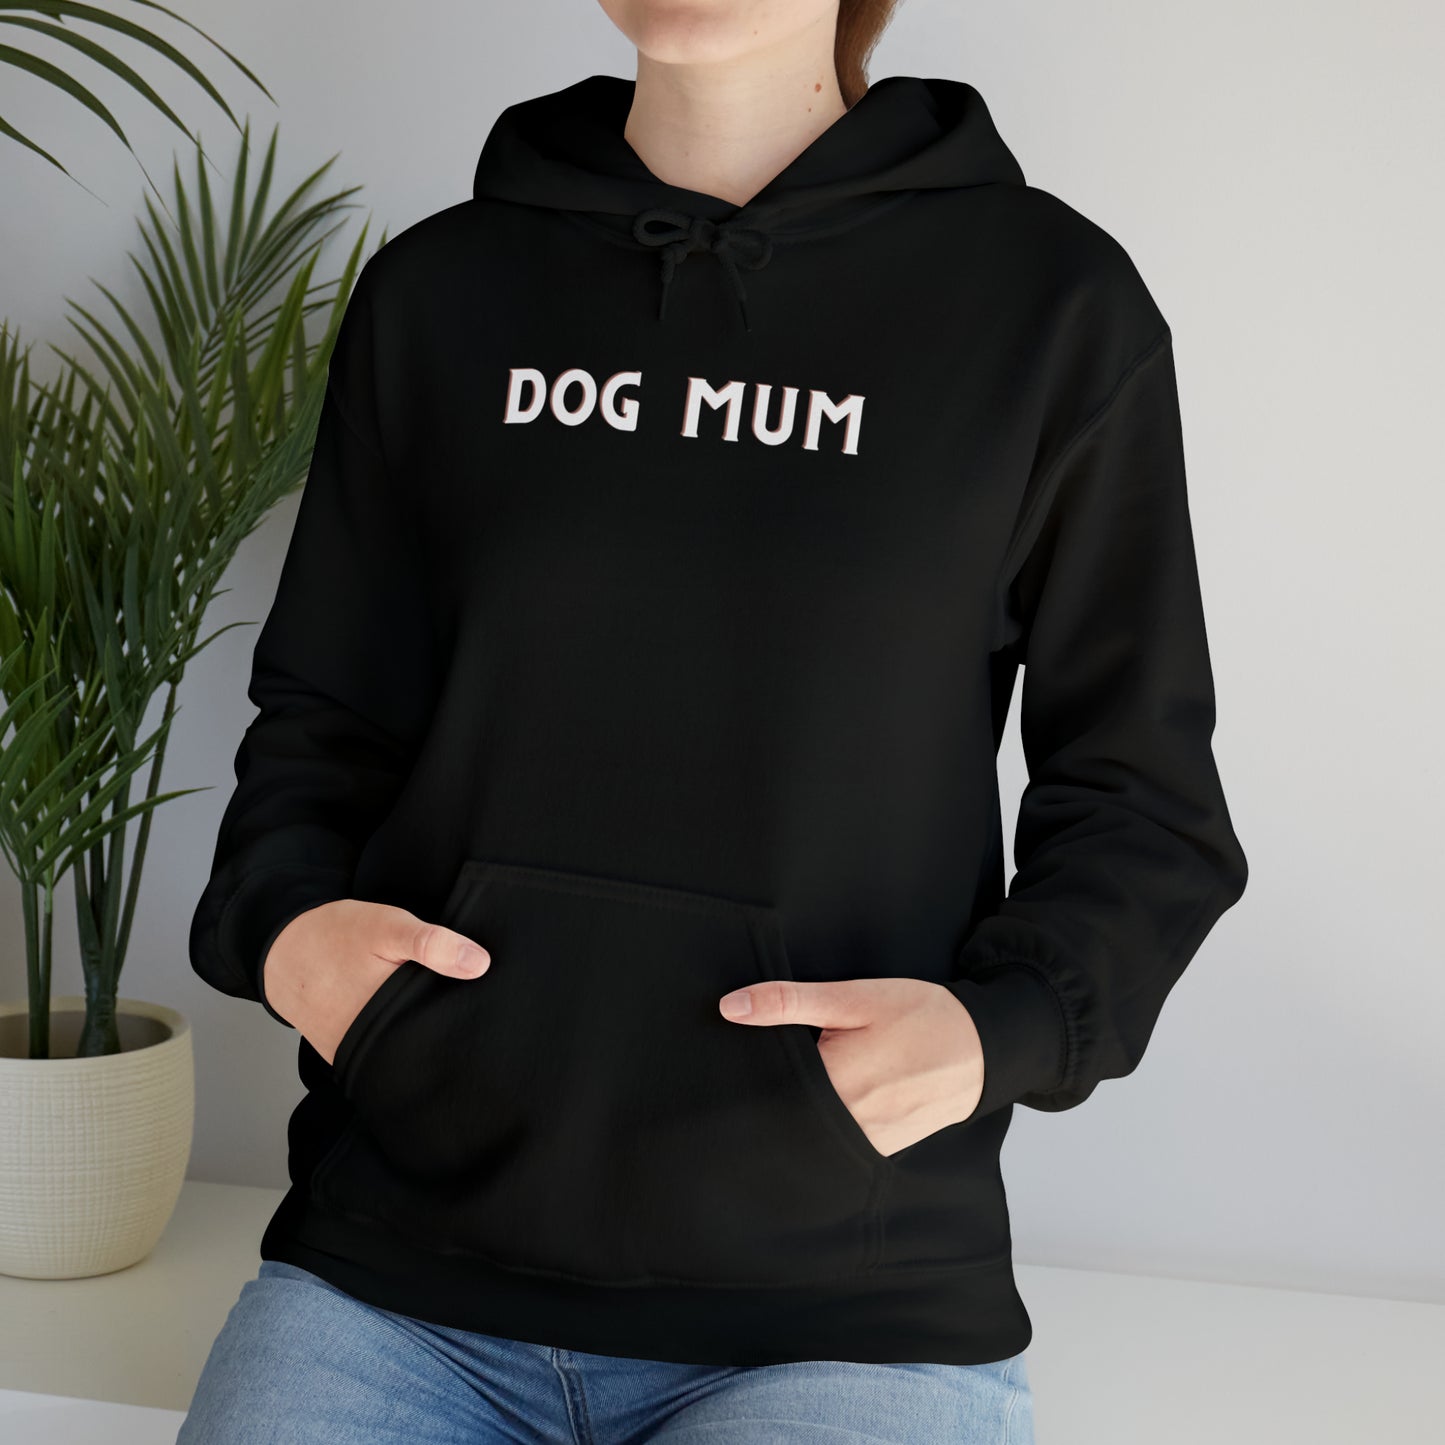 DOG MUM Hooded Sweatshirt